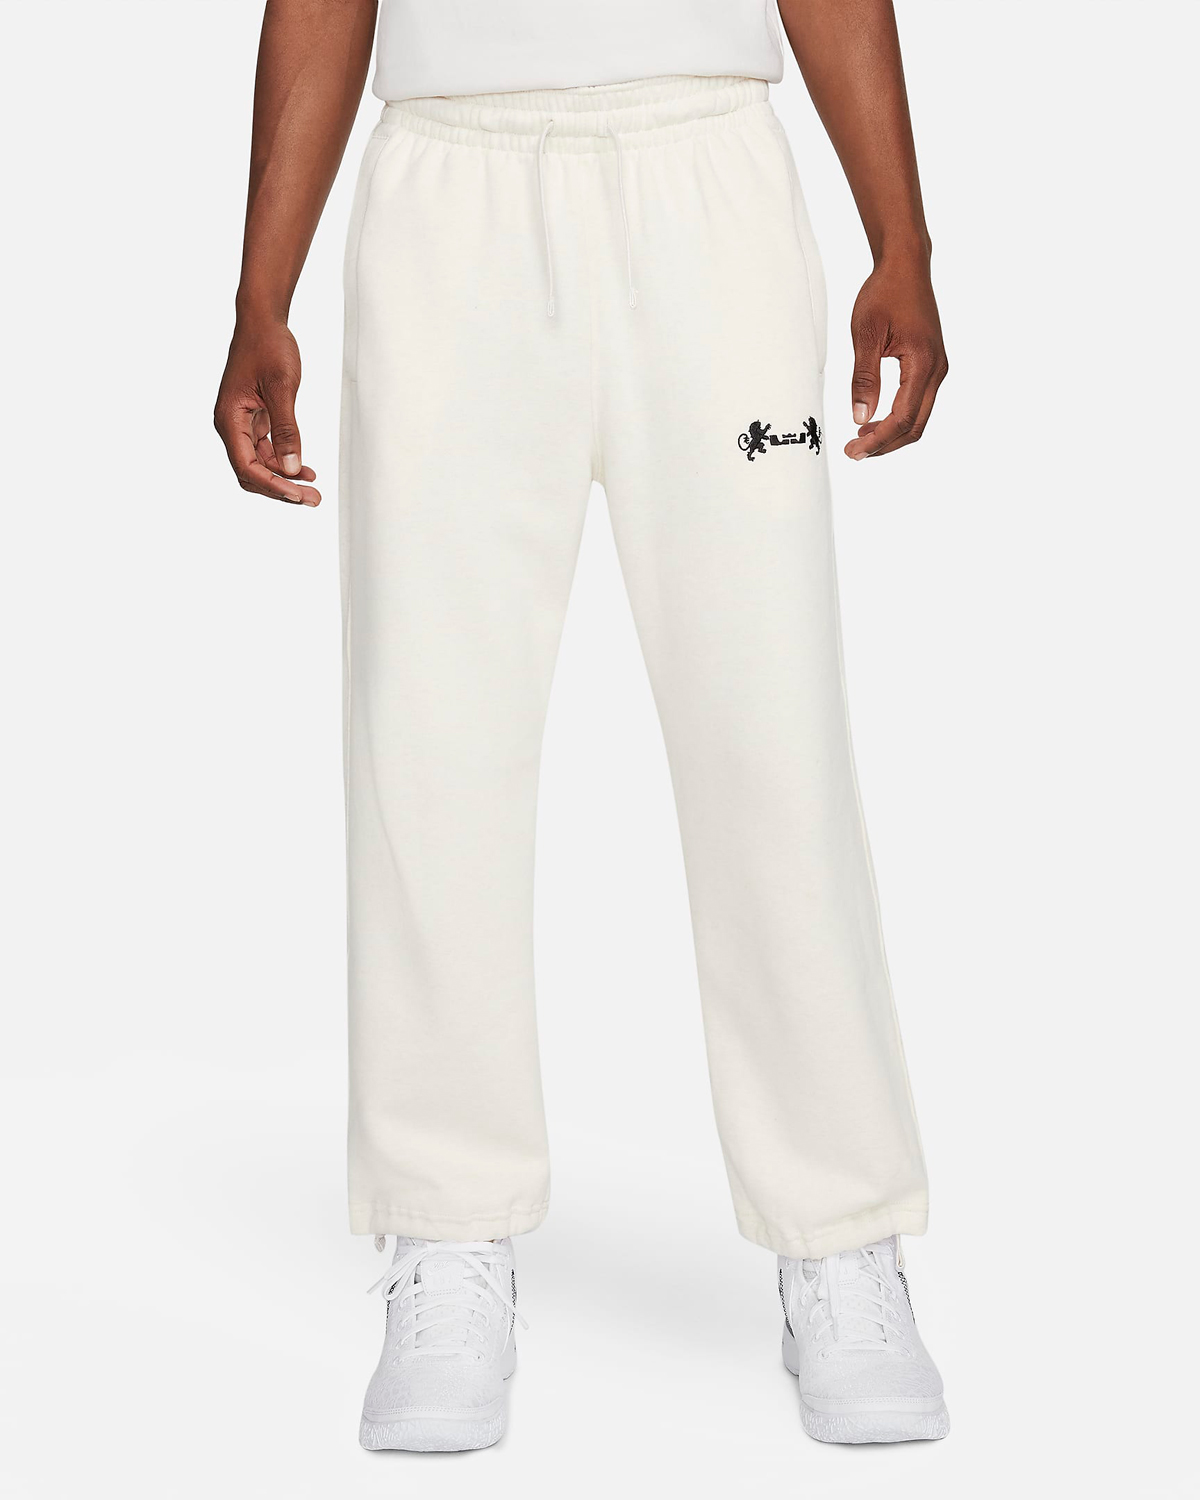 Nike-LeBron-21-Akoya-Pants-1